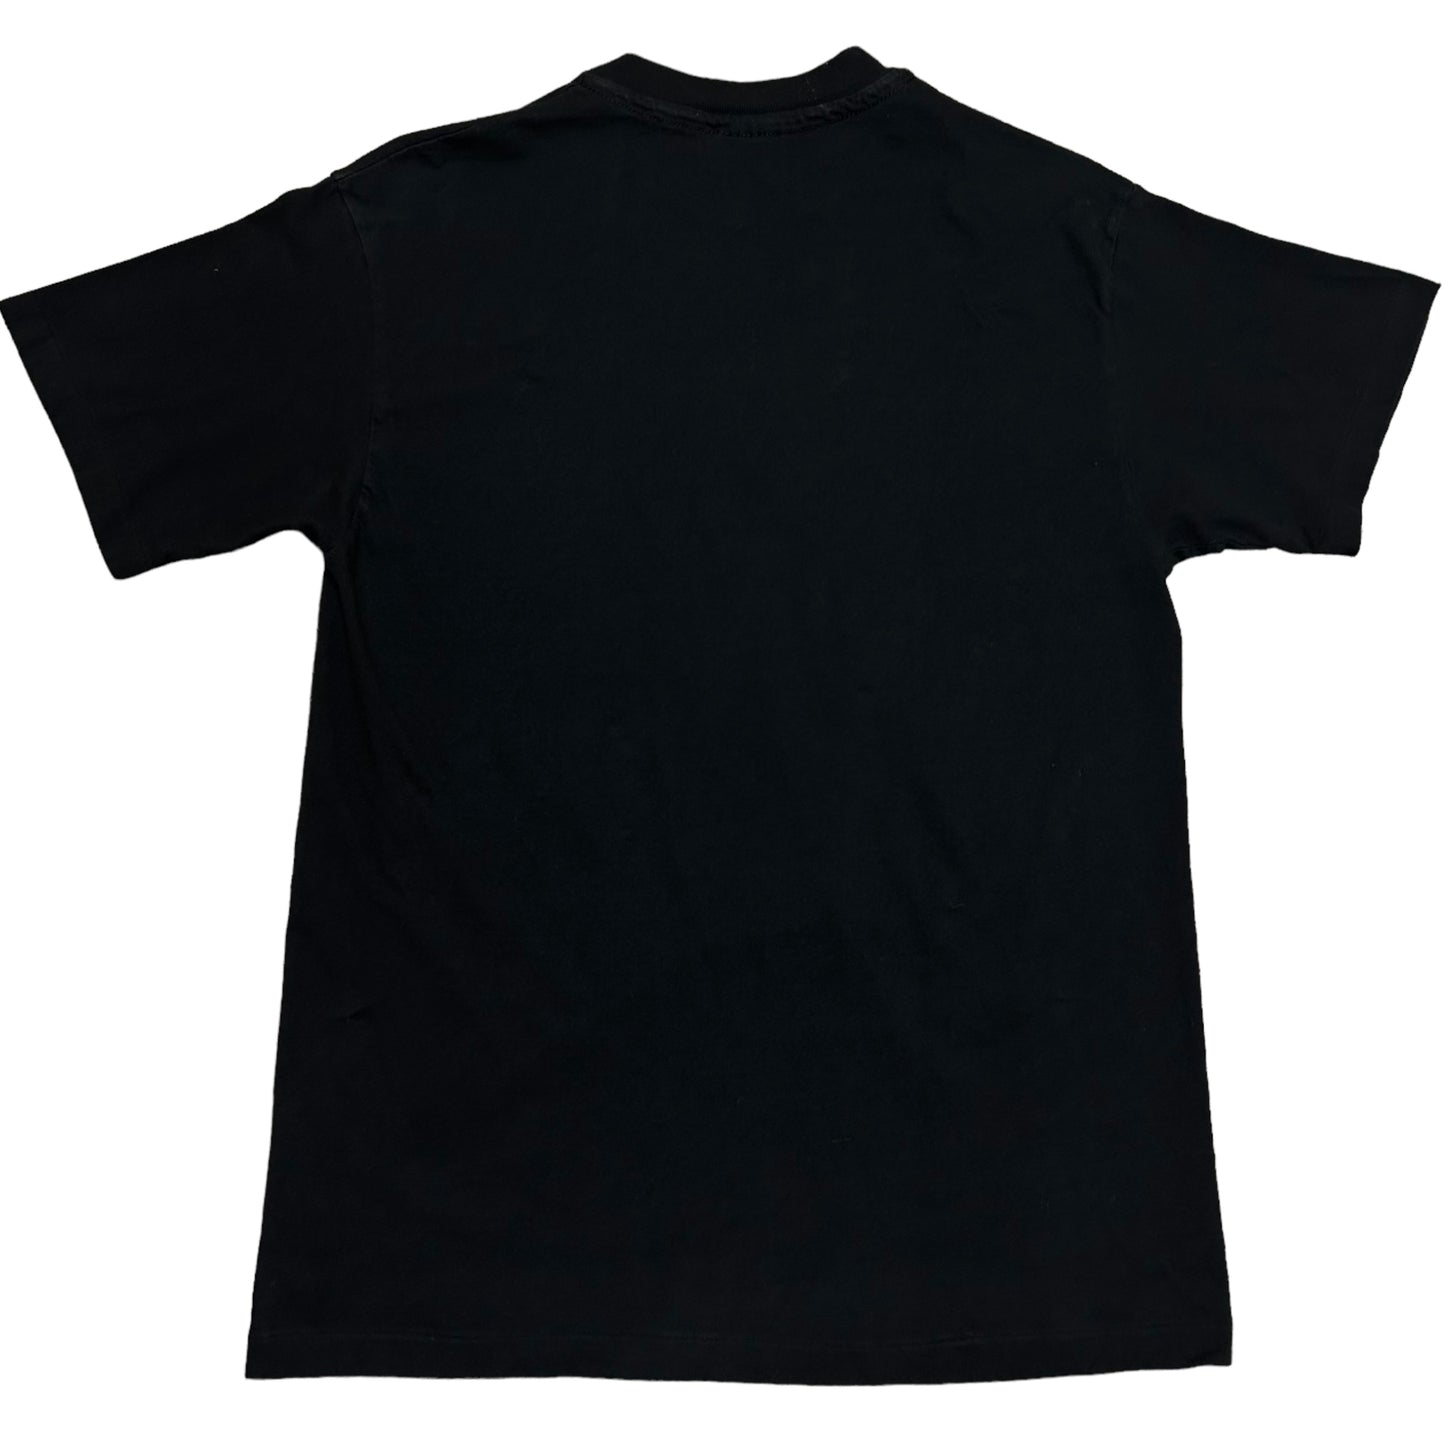 Vintage 1990s MLB Mo Vaughn “Hit Dawg” Black Graphic T-Shirt - Size Medium